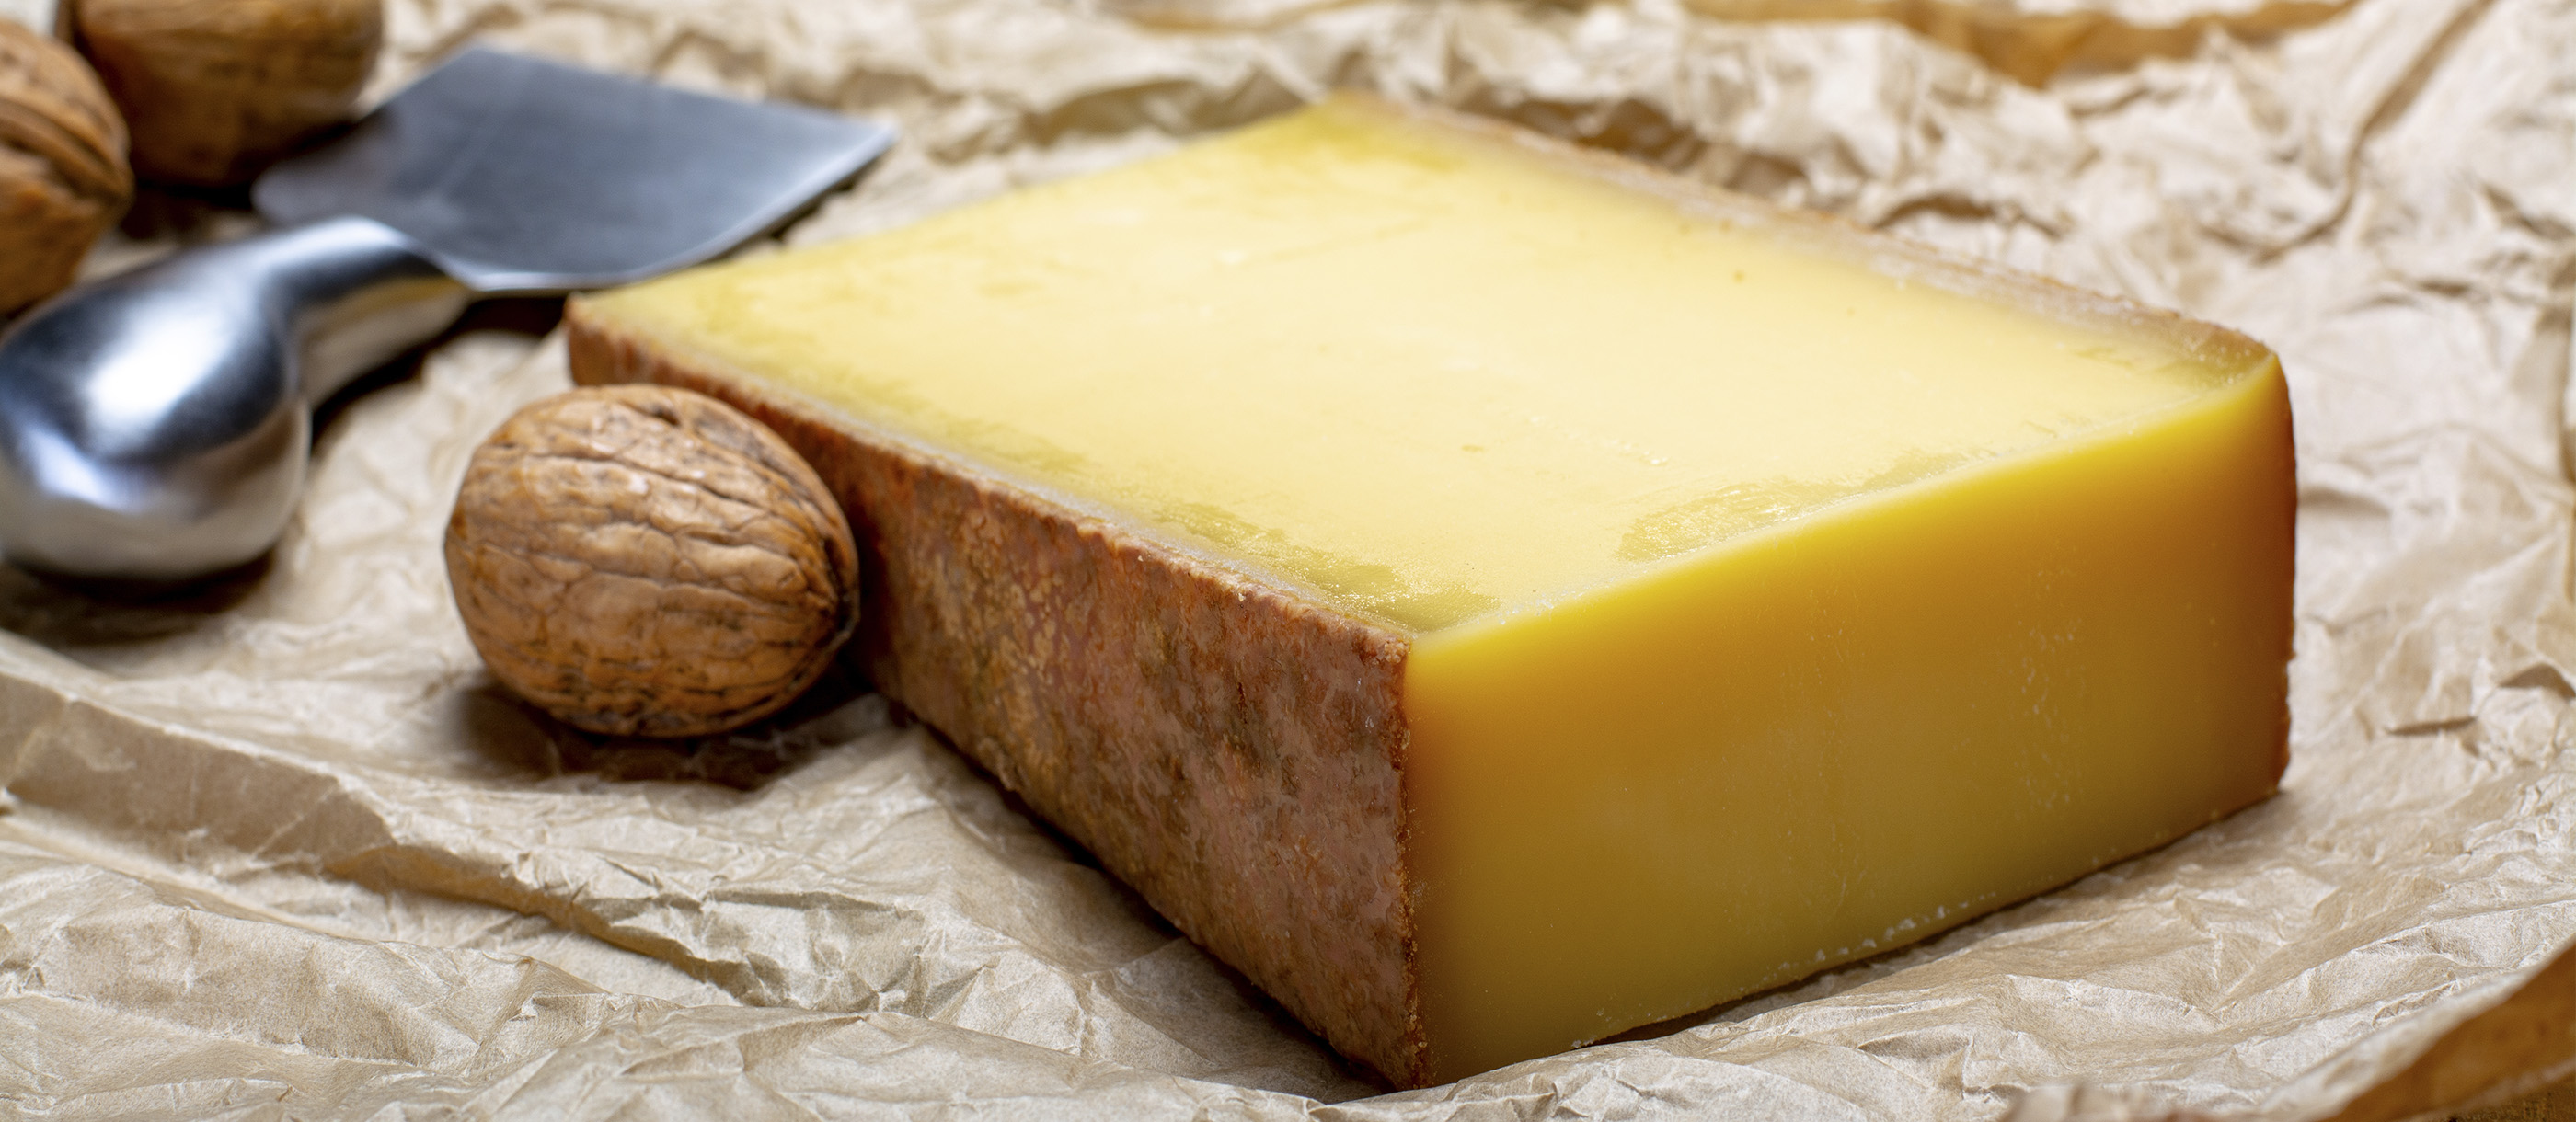 10 Most Popular Swiss Cheeses - TasteAtlas